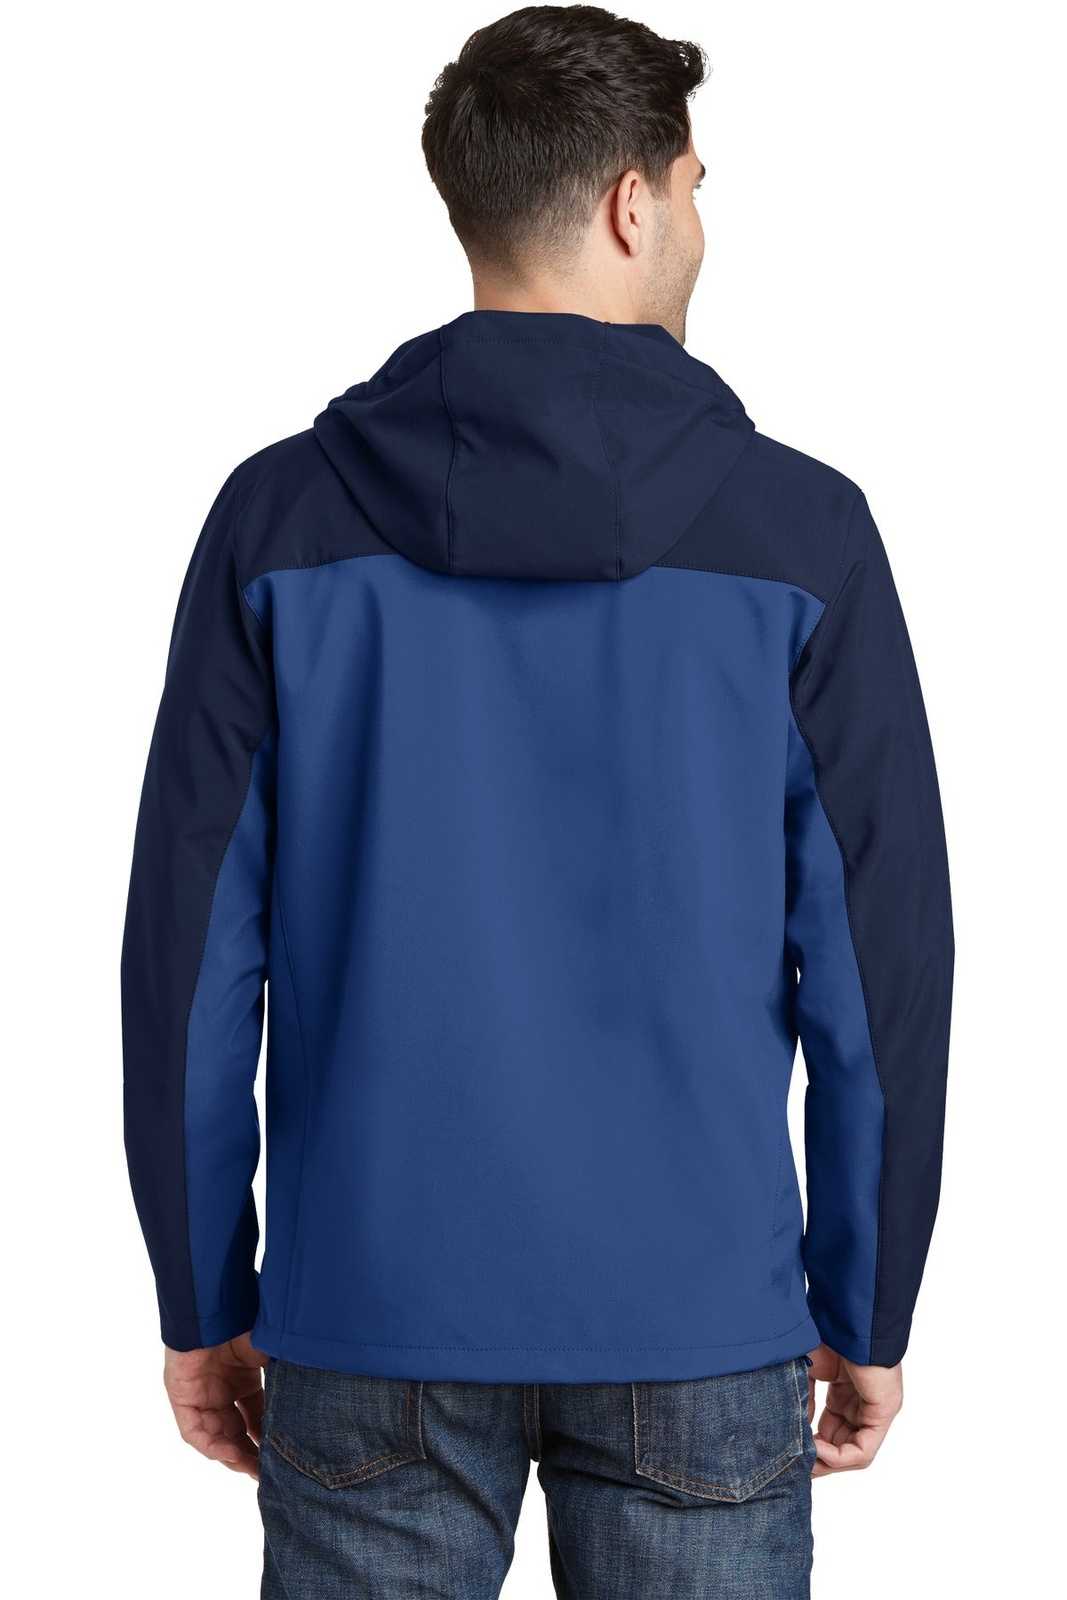 Port Authority J335 Hooded Core Soft Shell Jacket - Night Sky Blue Dress Blue Navy - HIT a Double - 2